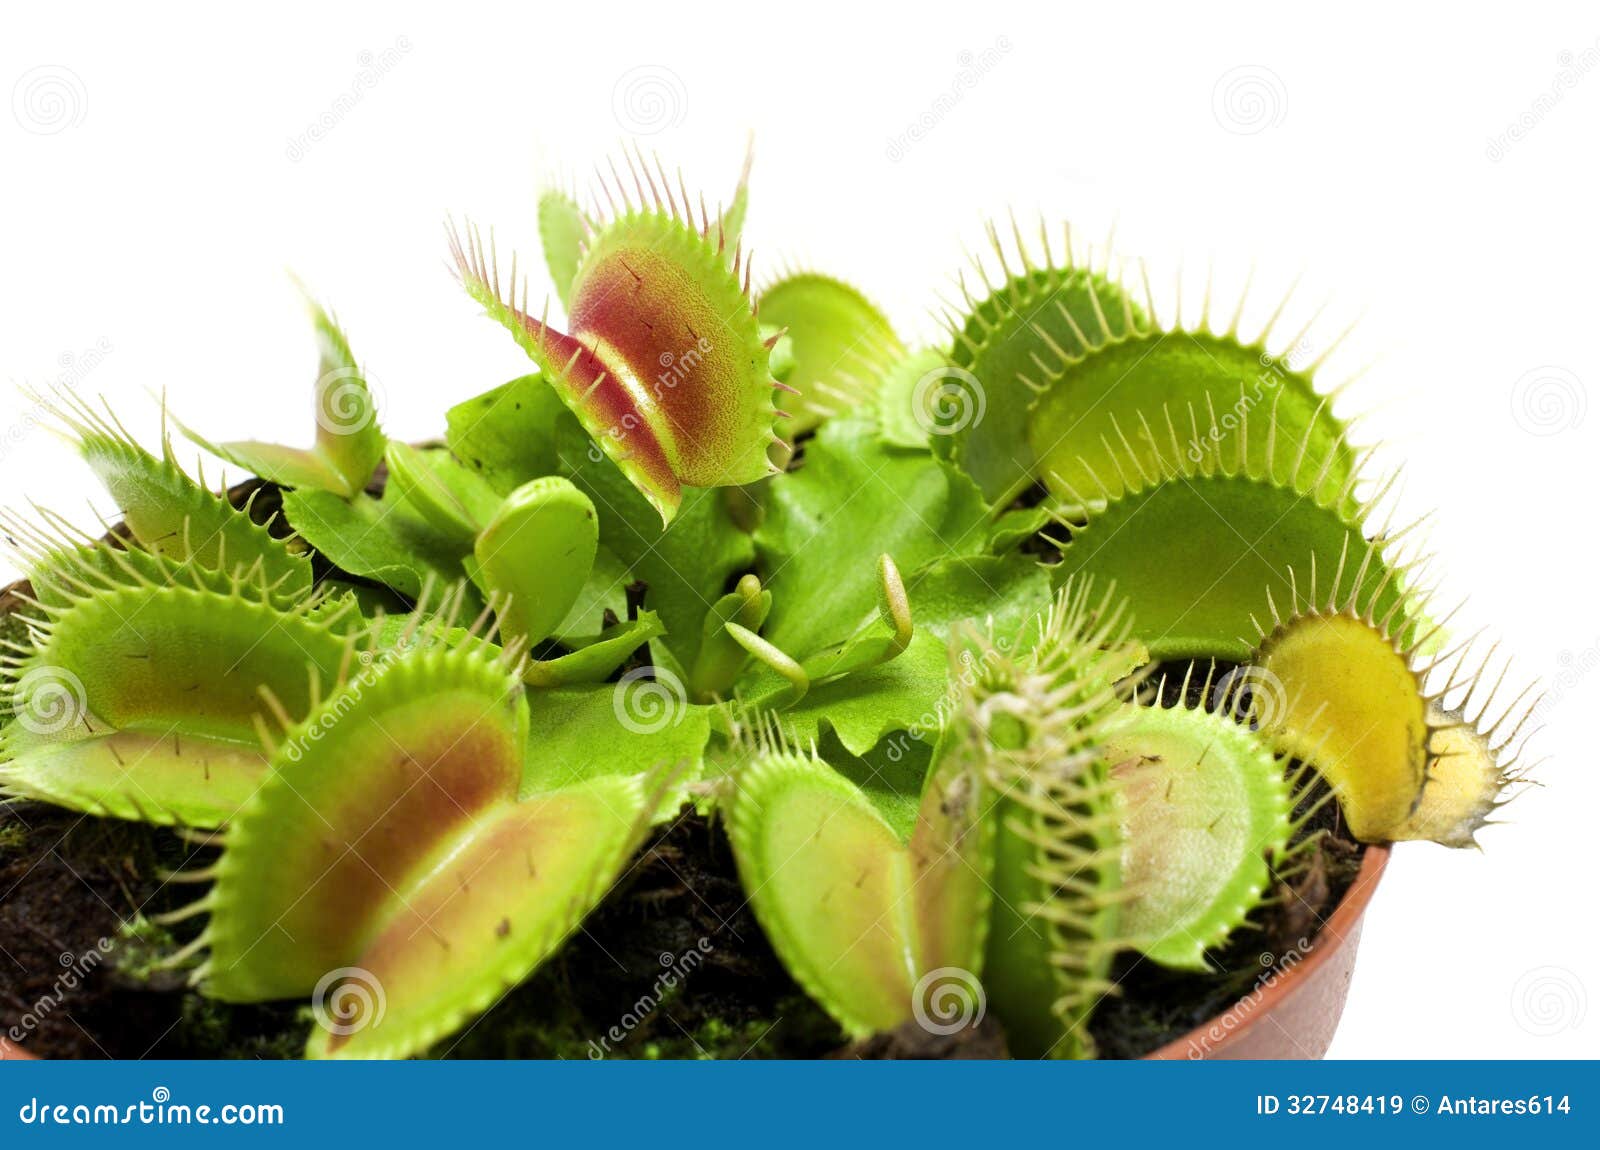 carnivorous plant